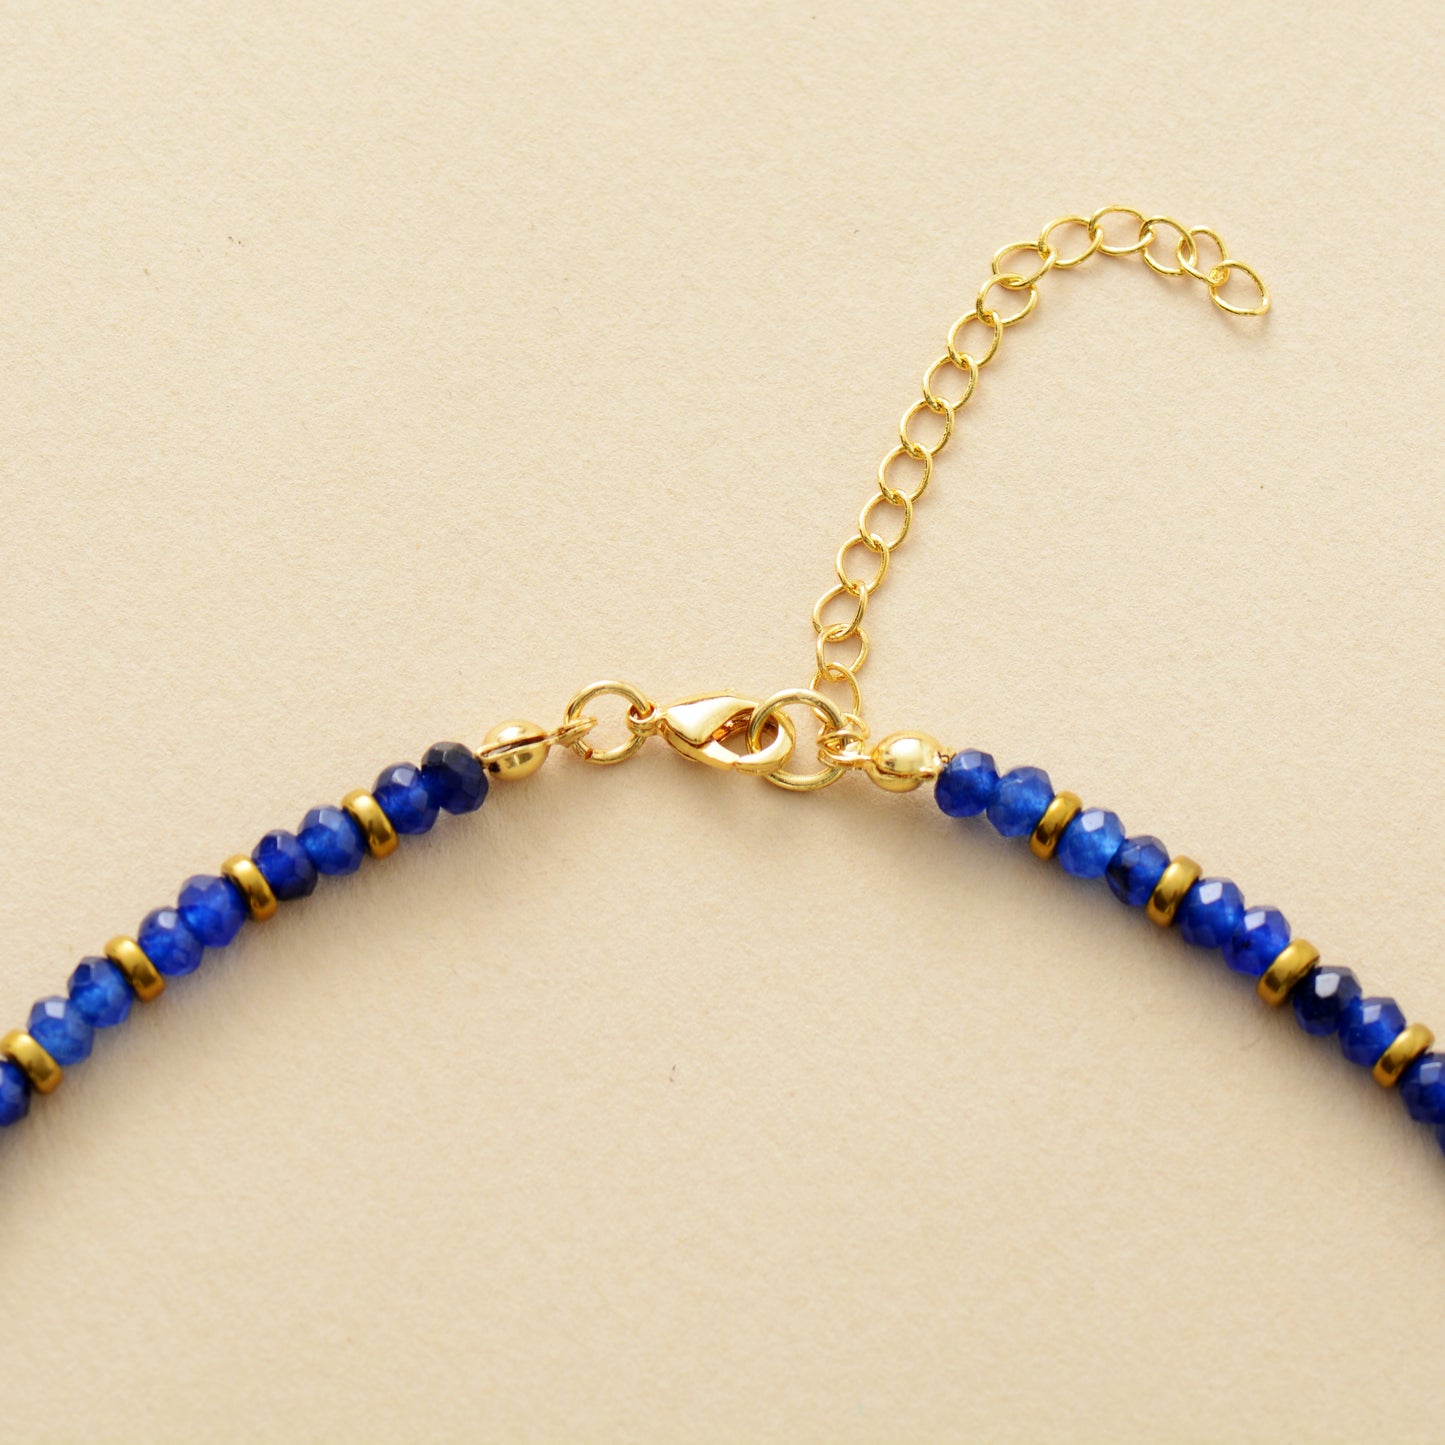 Handmade Lapis Lazuli Charm Choker Necklace